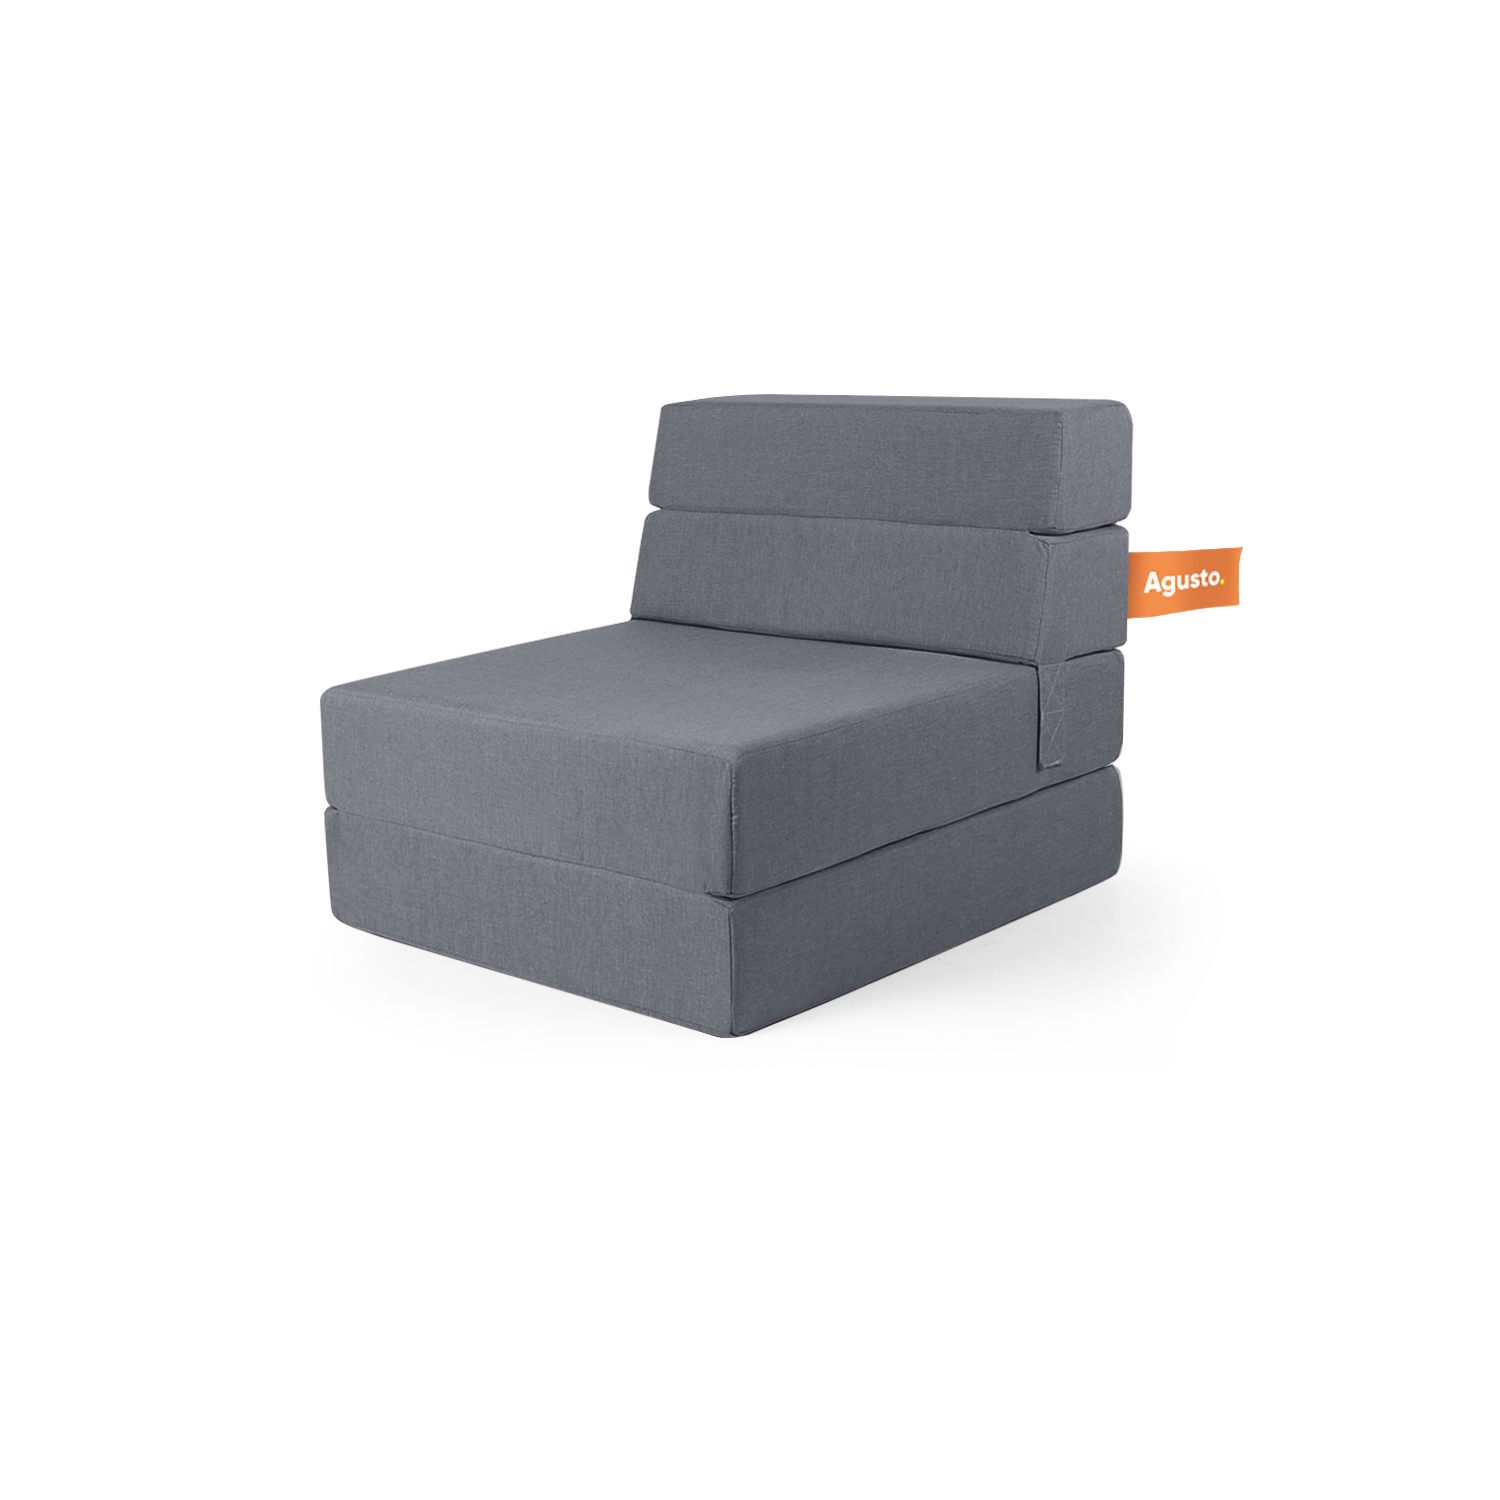 Sofa Cama Tamaño Individual SofaBlocks ® Agusto ®